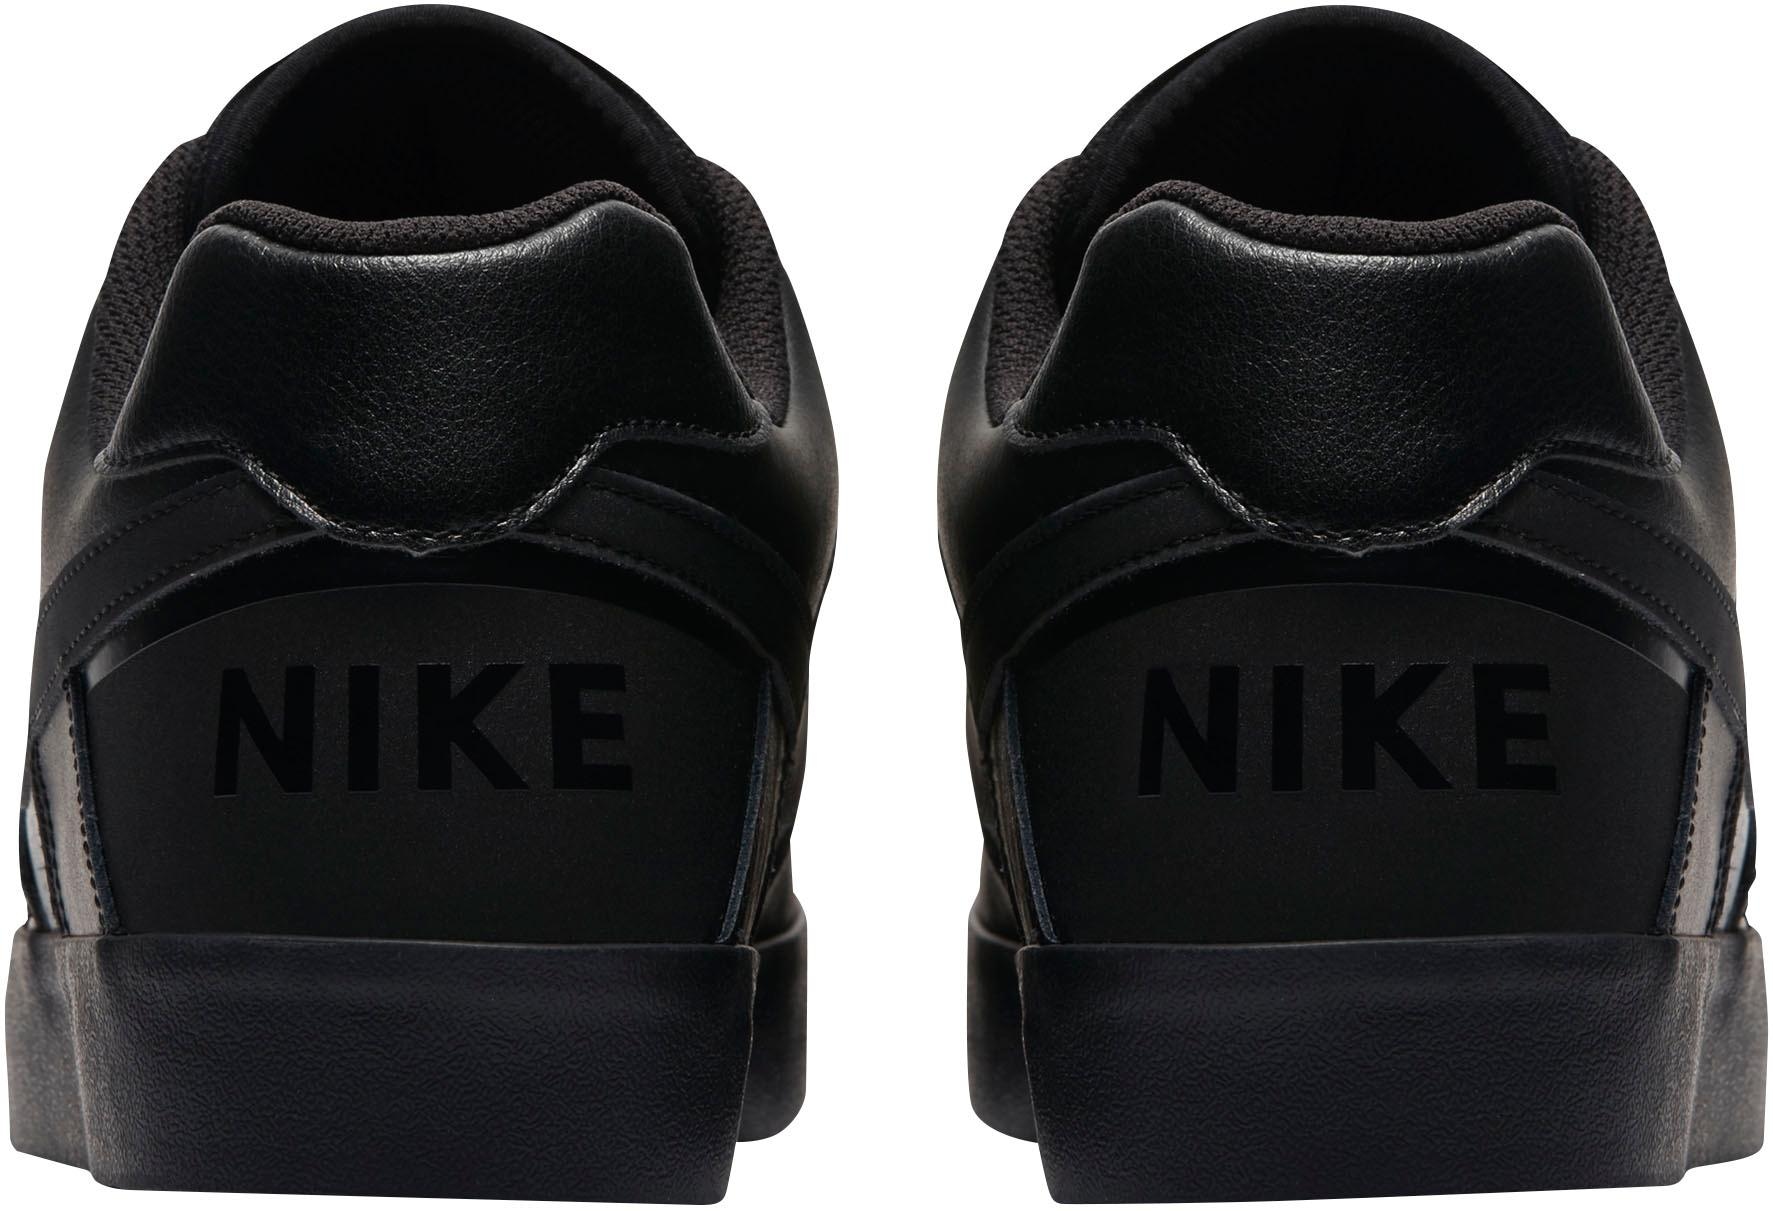 Nike SB Sneaker »SB DELTA FORCE VULC«